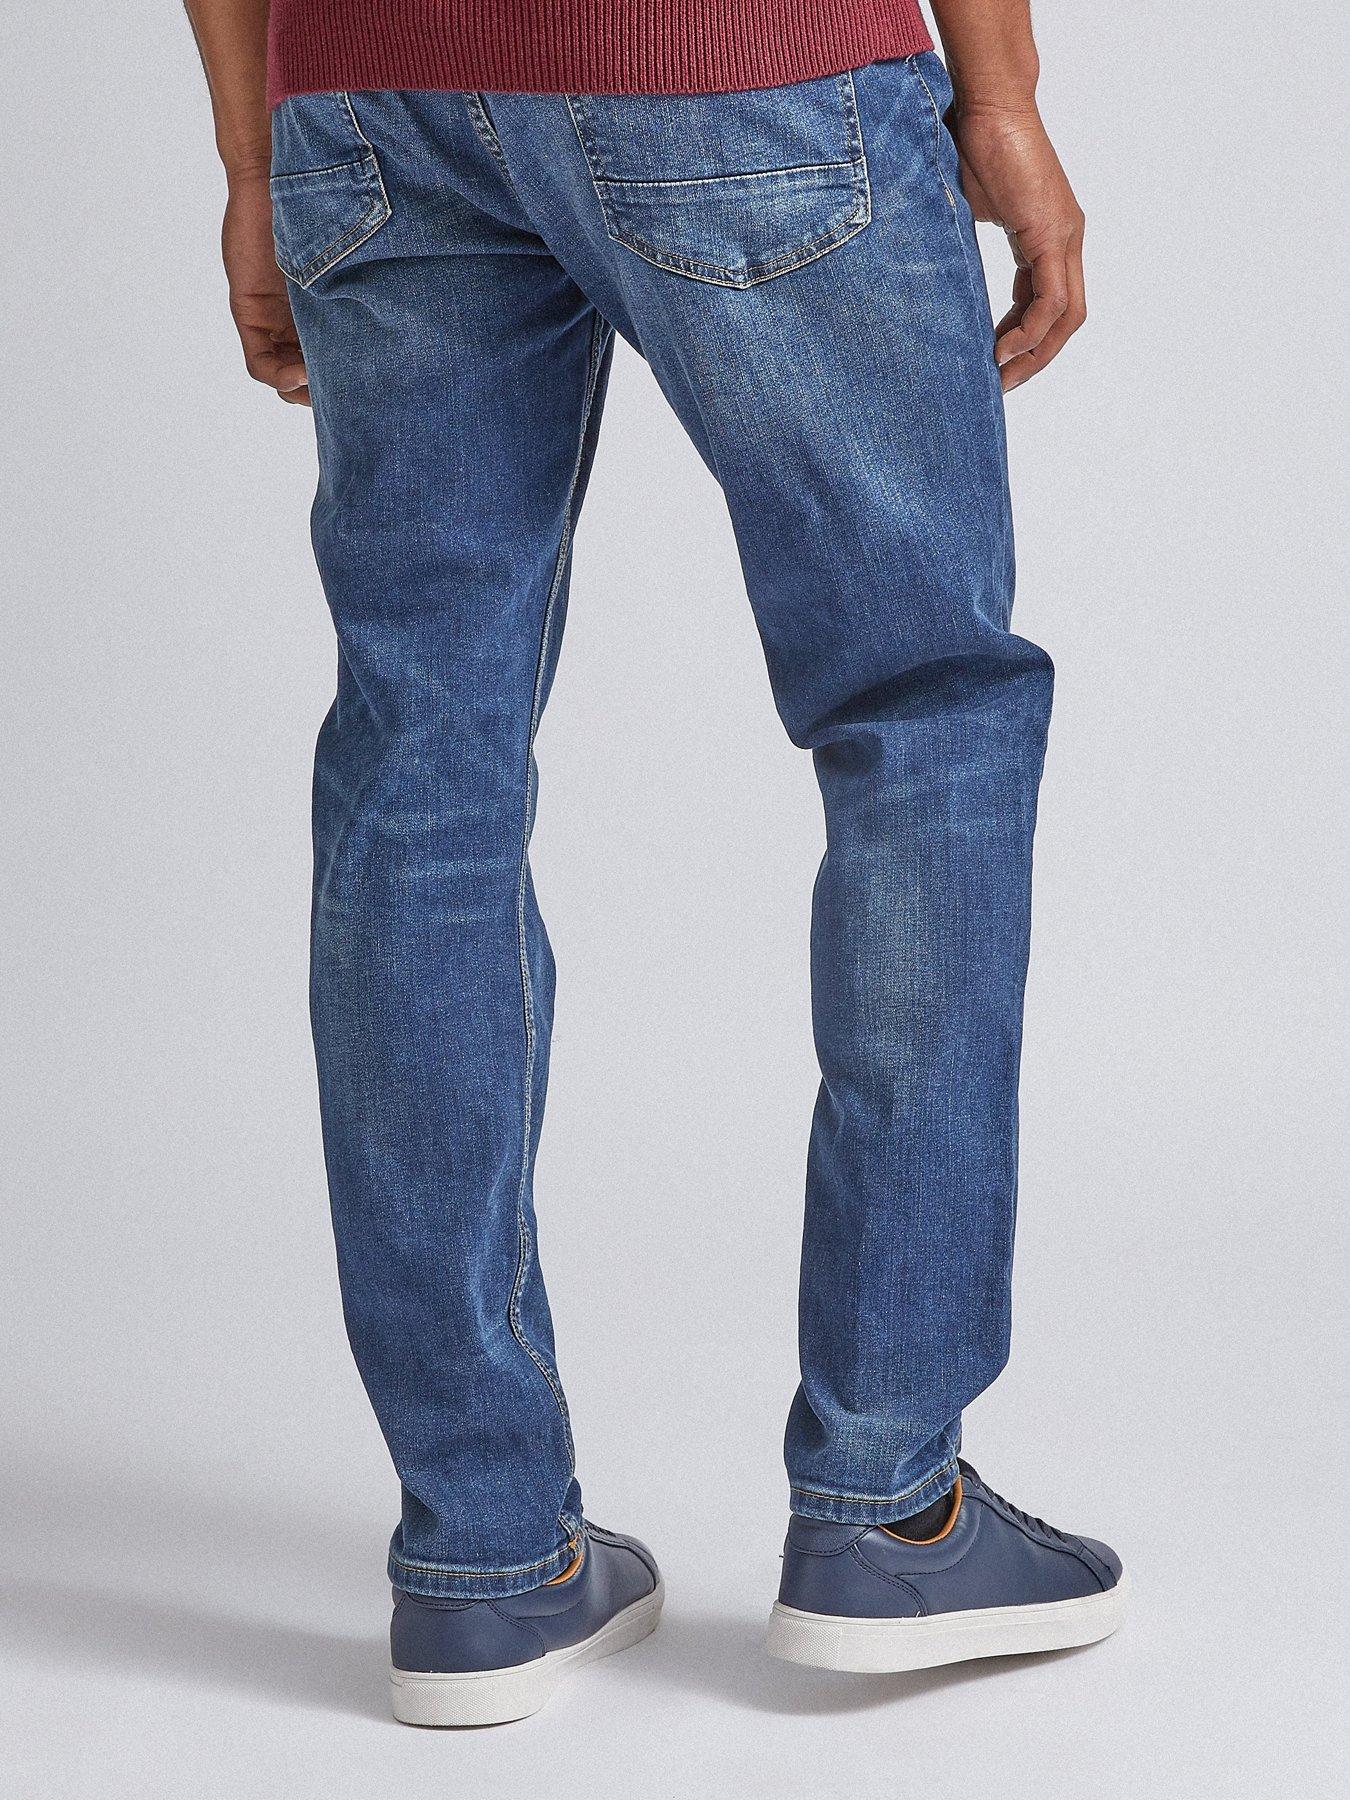 burton menswear london jeans